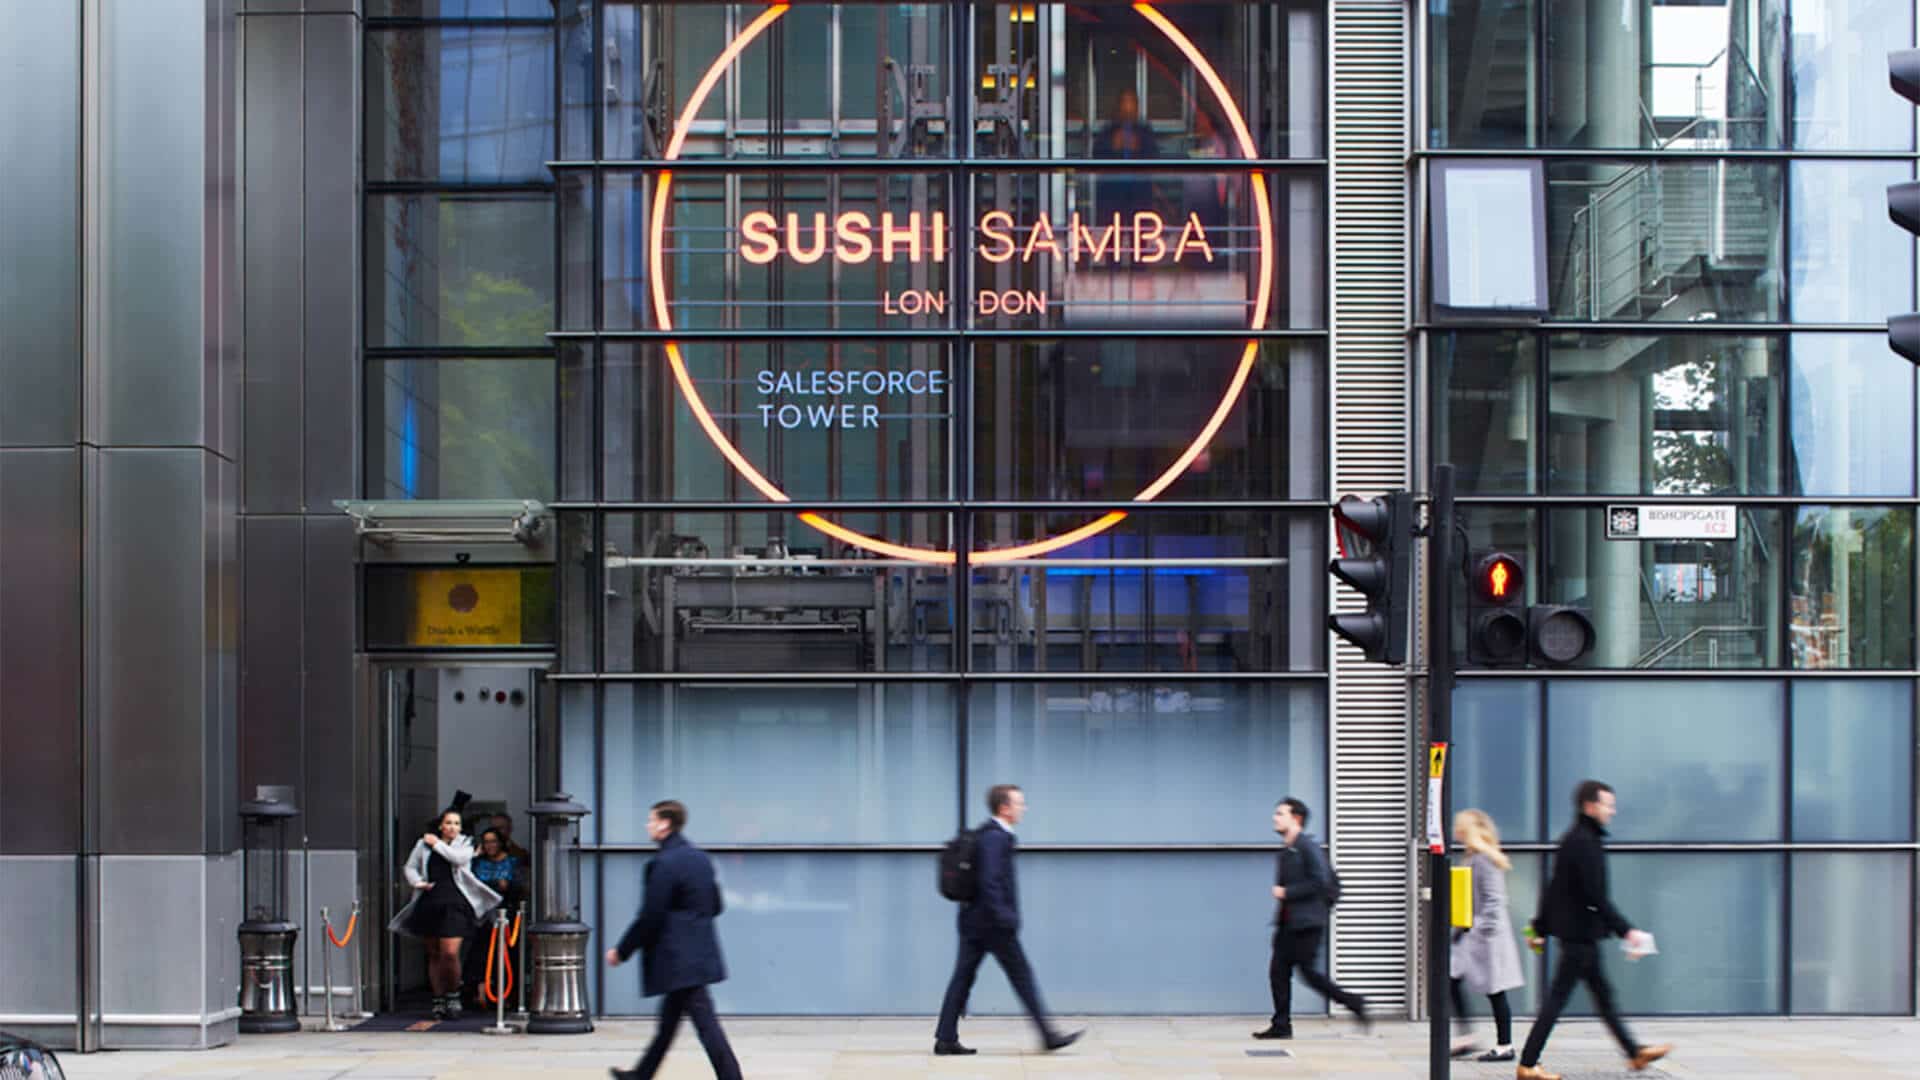 Sushi Samba at Salesforce Tower